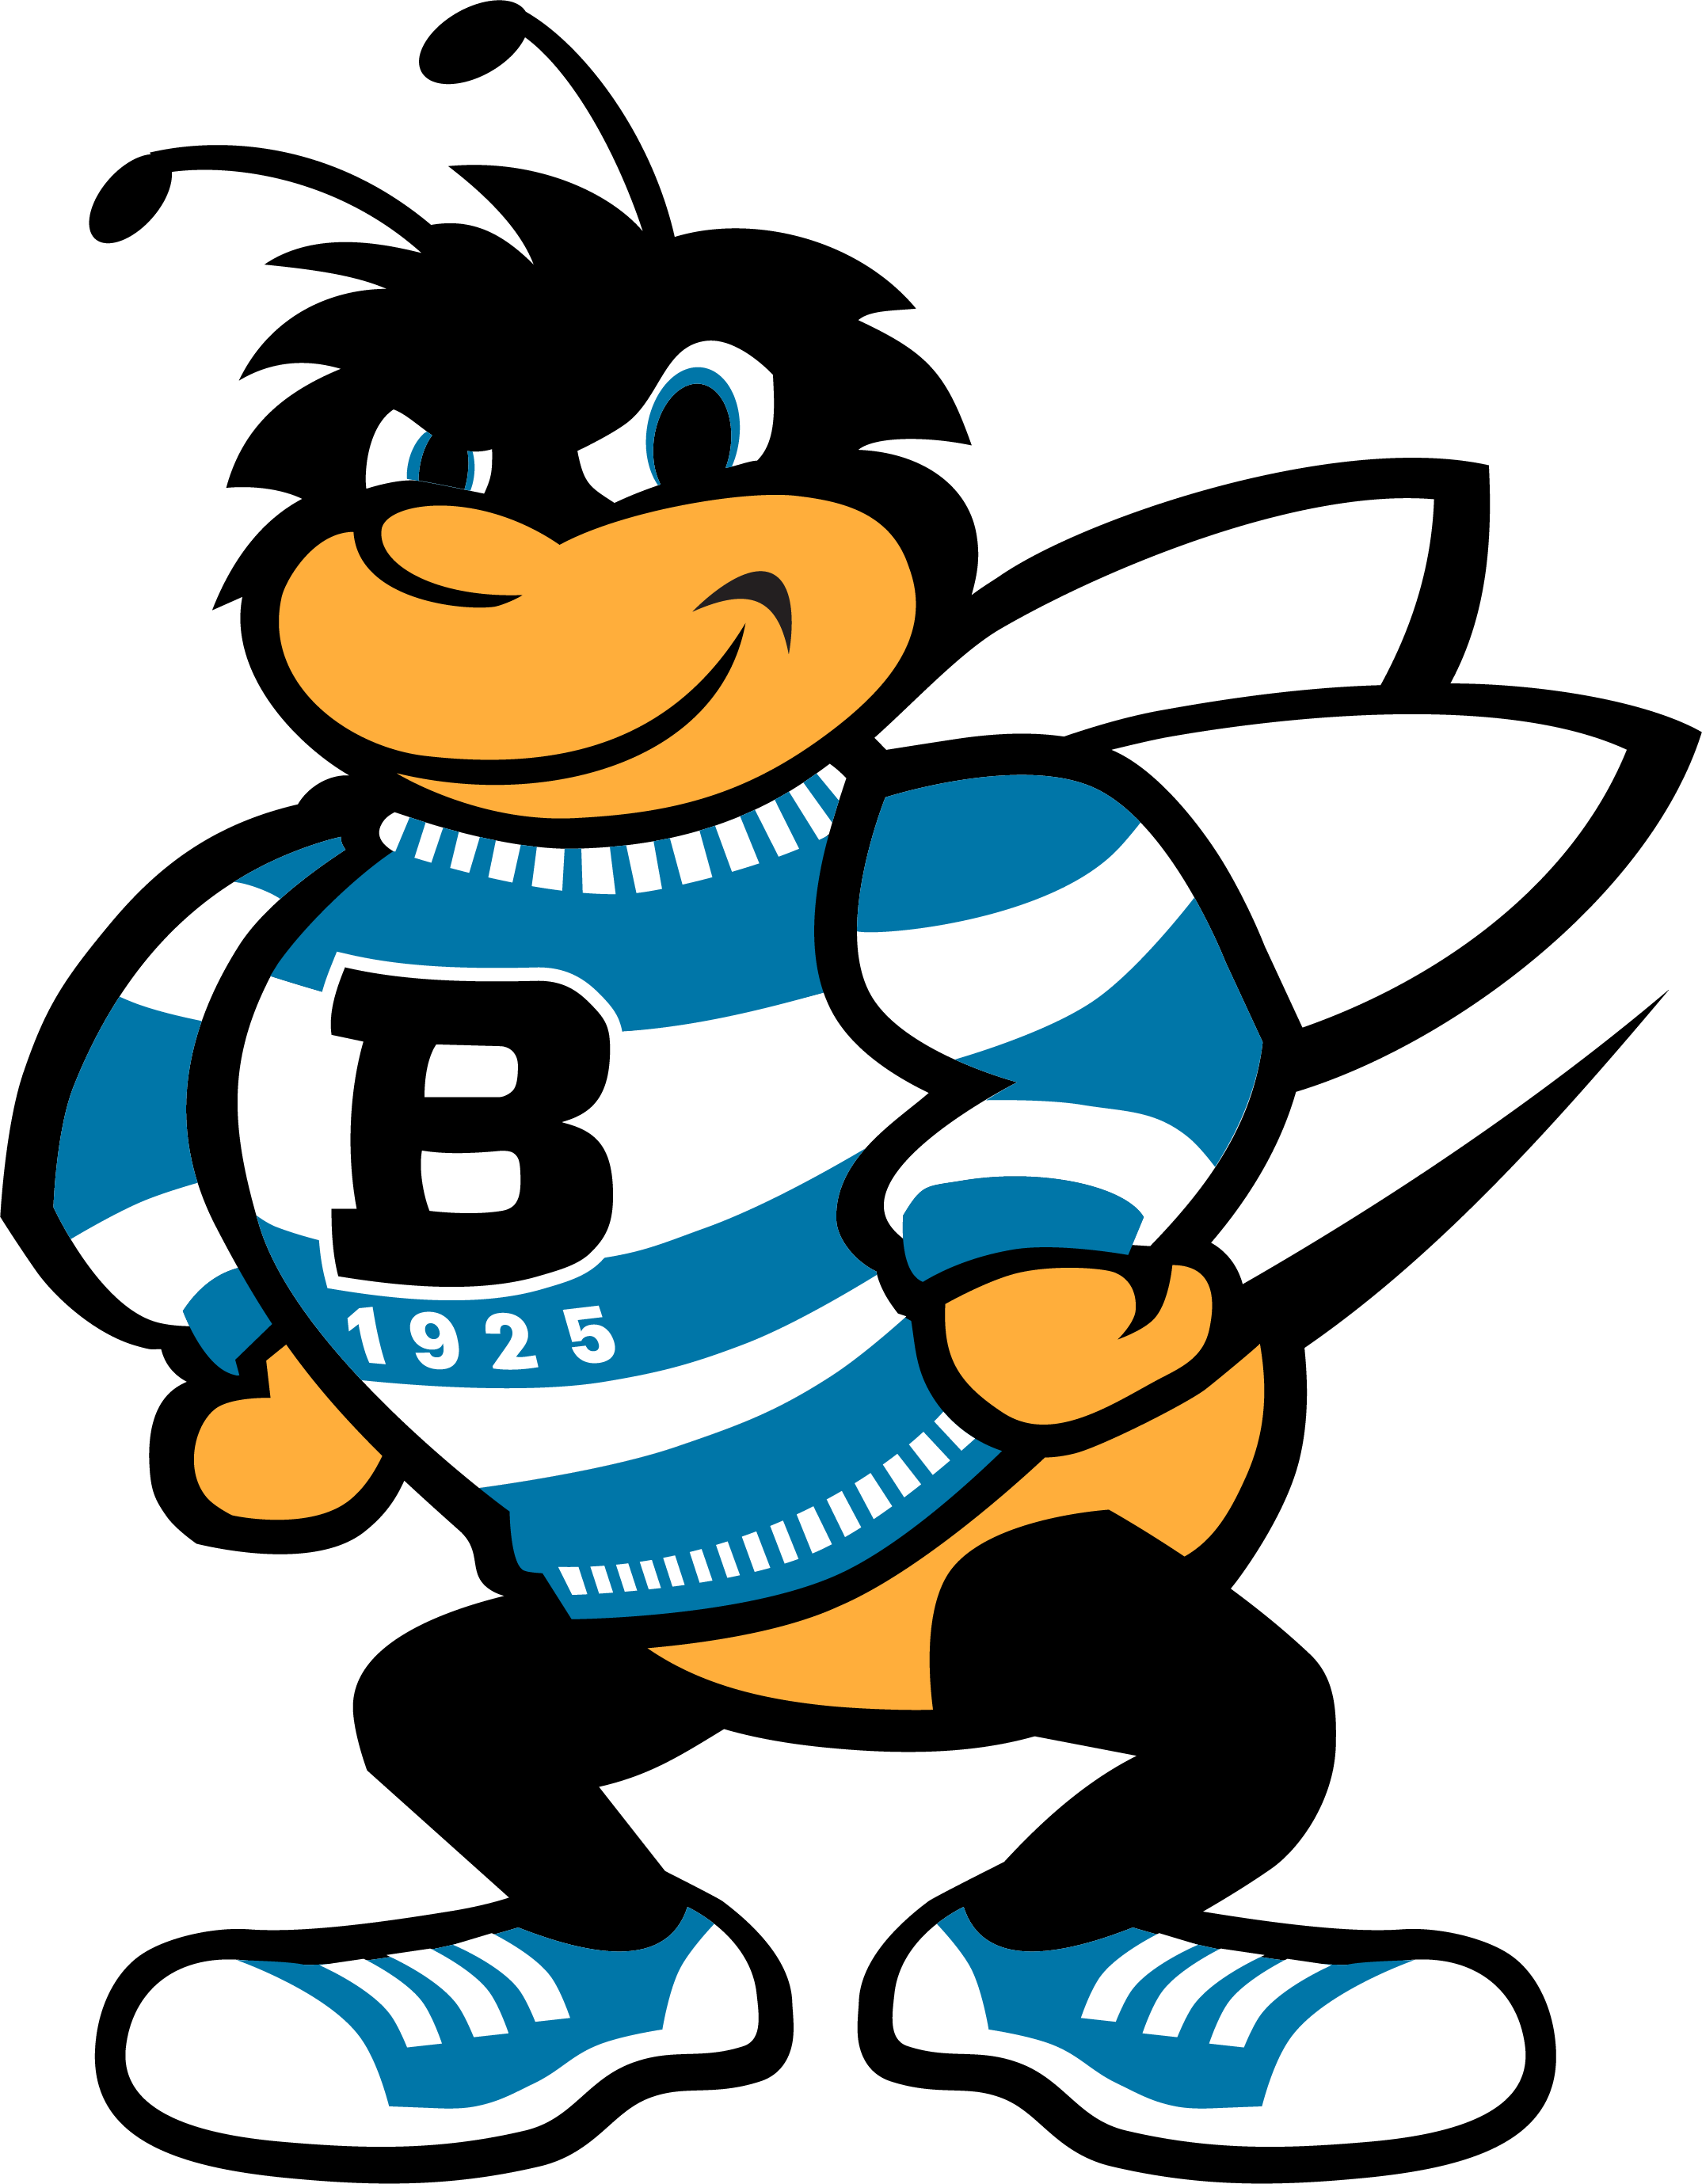 Eubie, the University of Baltimore college mascot